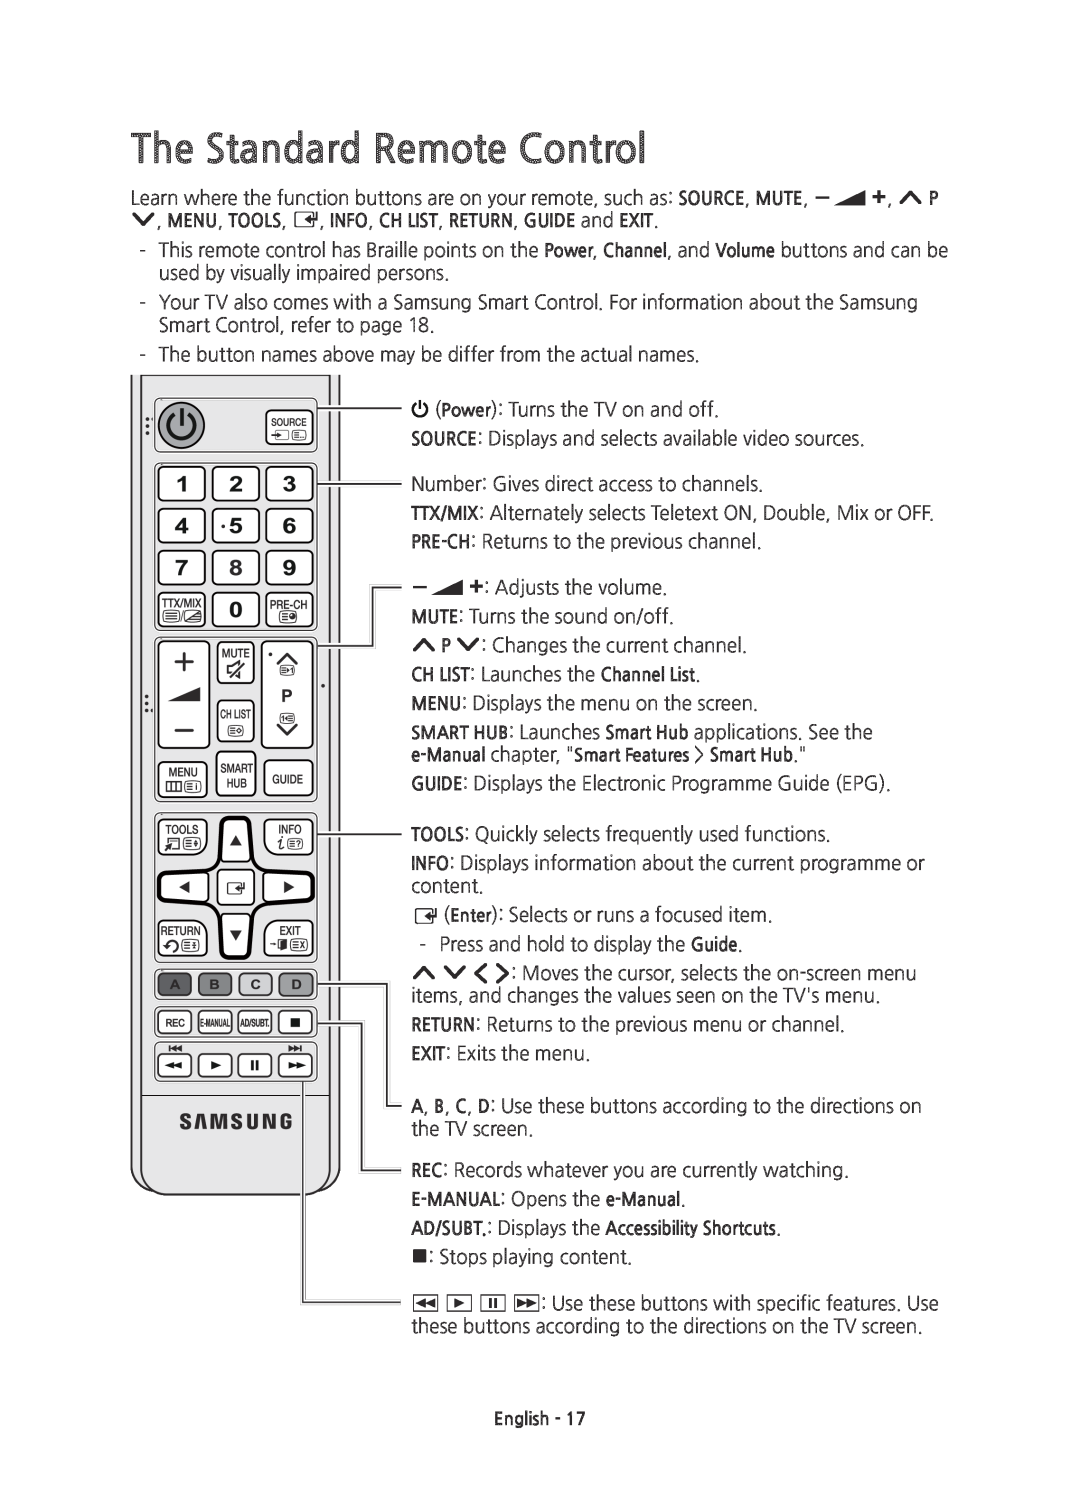 Samsung UE55JU7500TXZF manual The Standard Remote Control, CH LIST Launches the Channel List, E-MANUAL Opens the e-Manual 